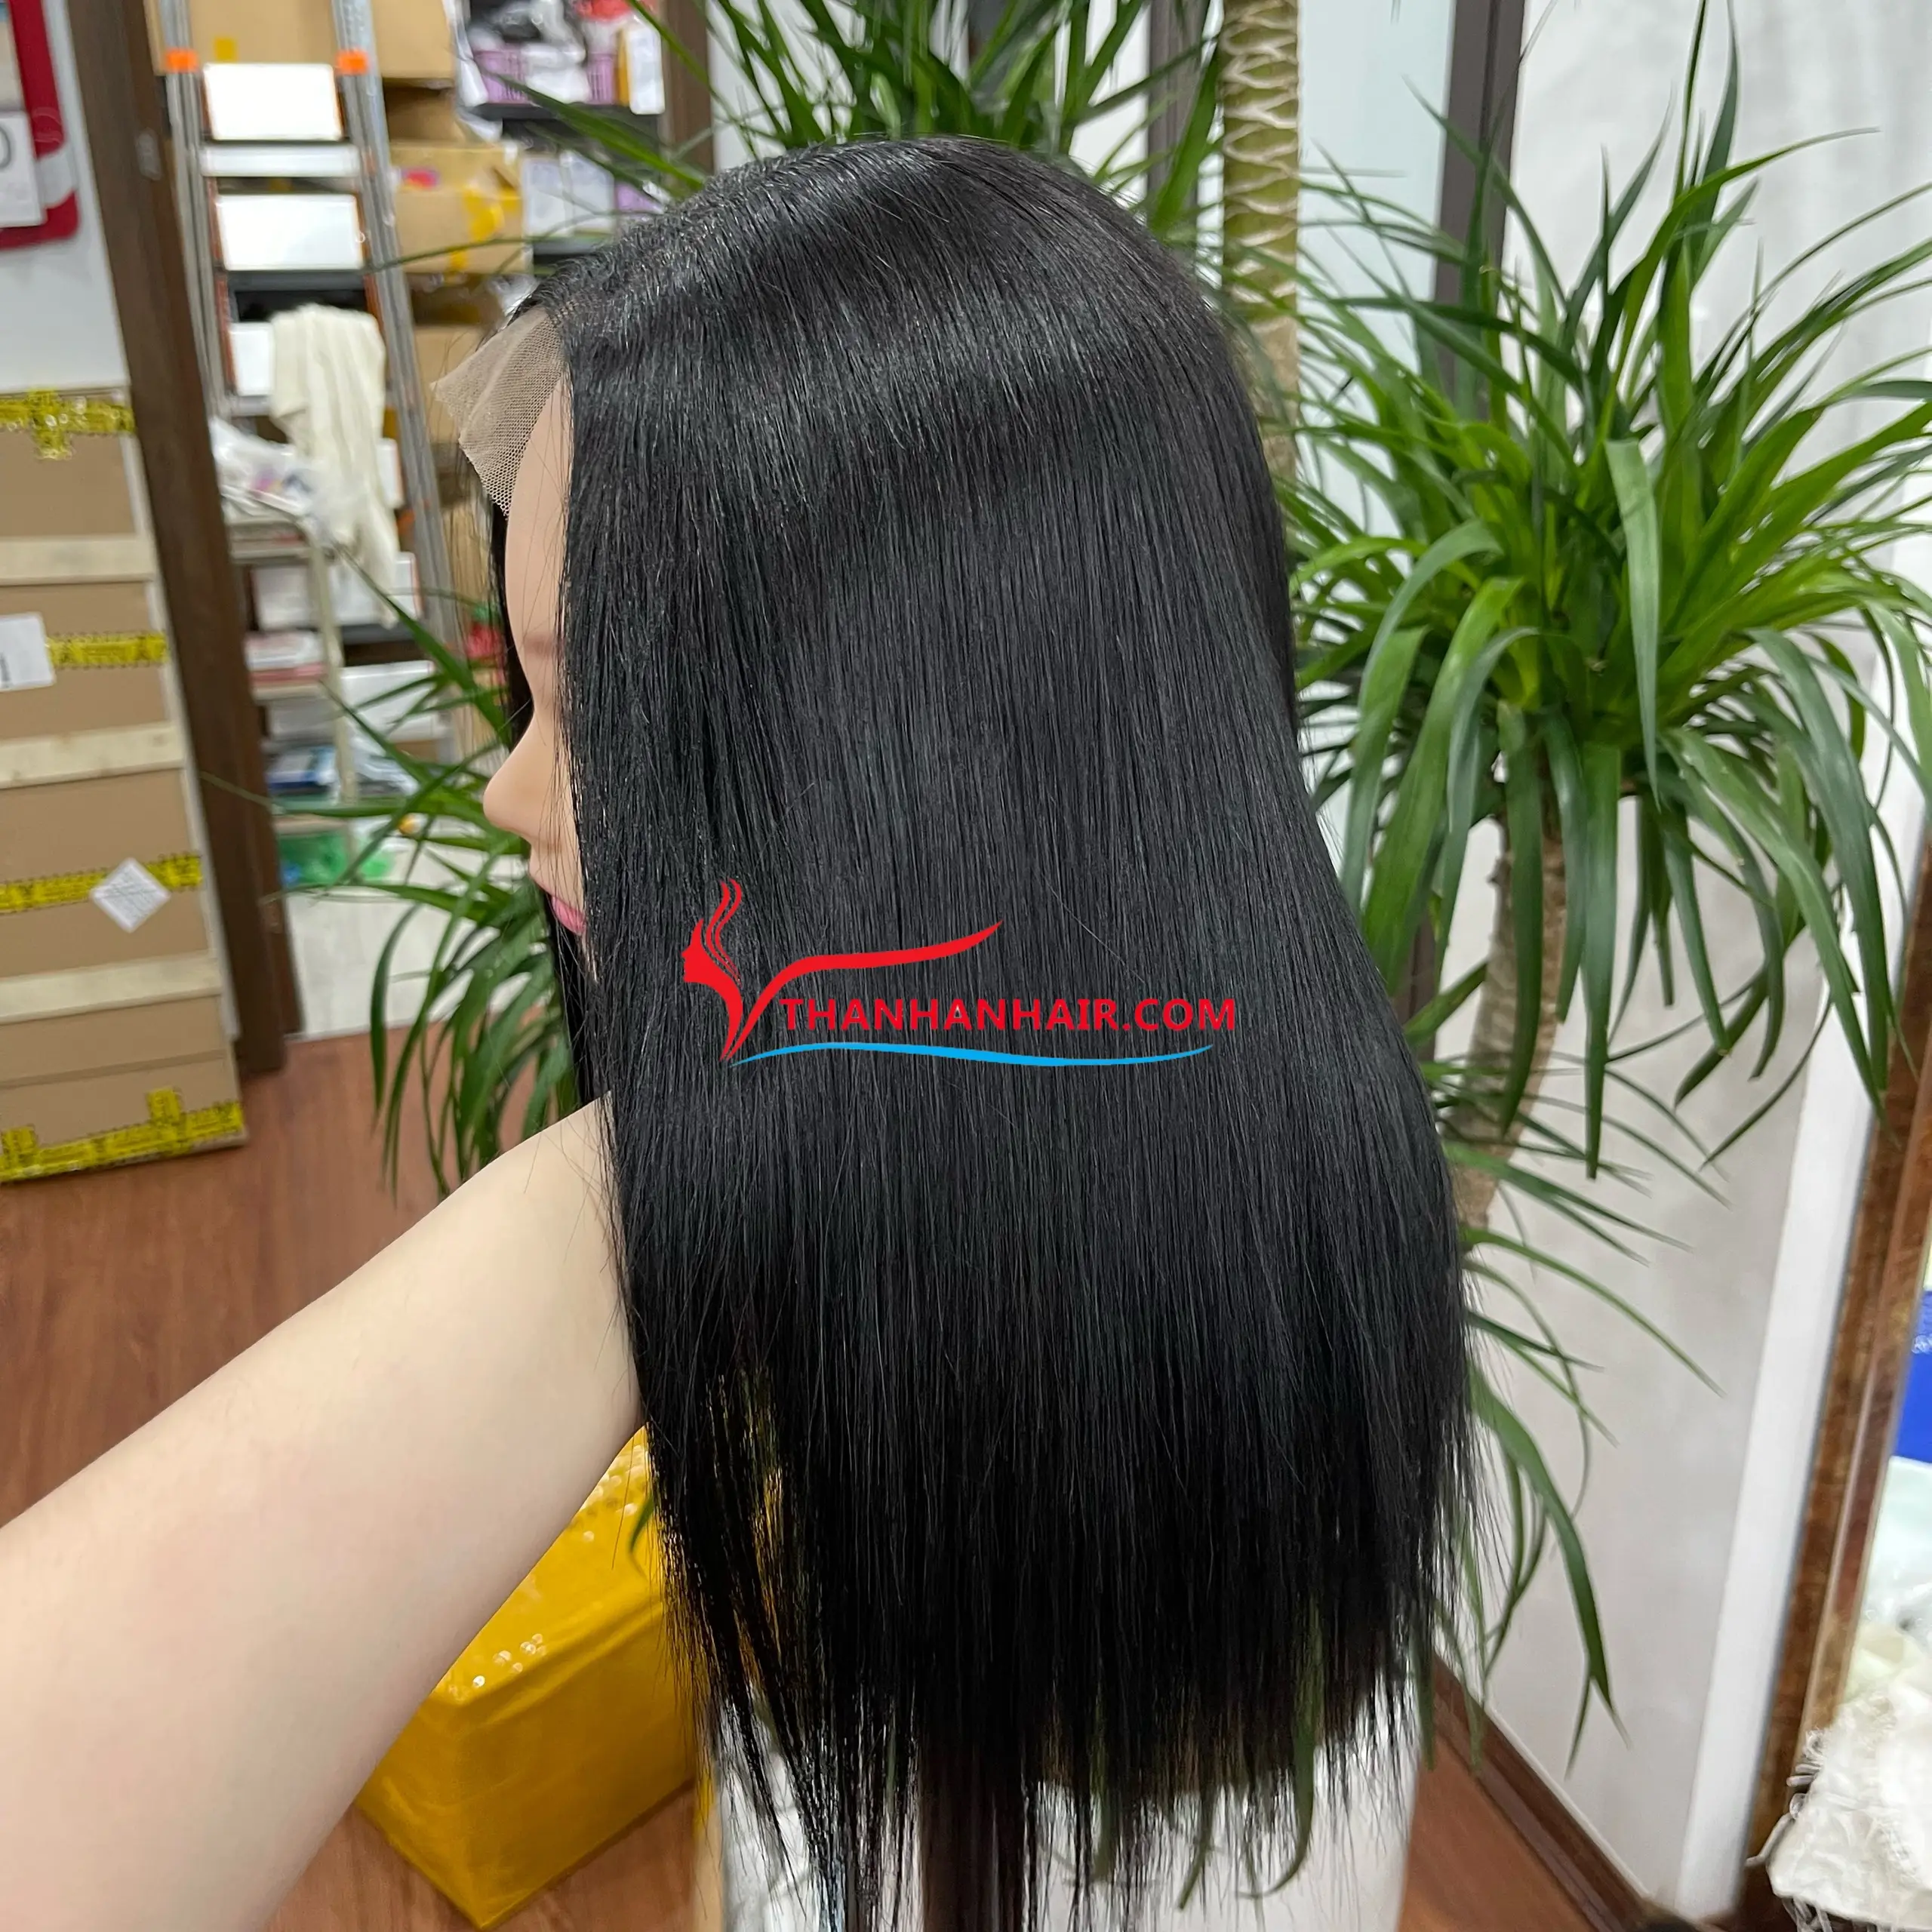 शिप करने के लिए तैयार बोन स्ट्रेट फ्रंटल क्लोजर विग प्राकृतिक काला 14 इंच- वियतनामी बाल एक्सटेंशन- प्राकृतिक रंग- रेमी बाल